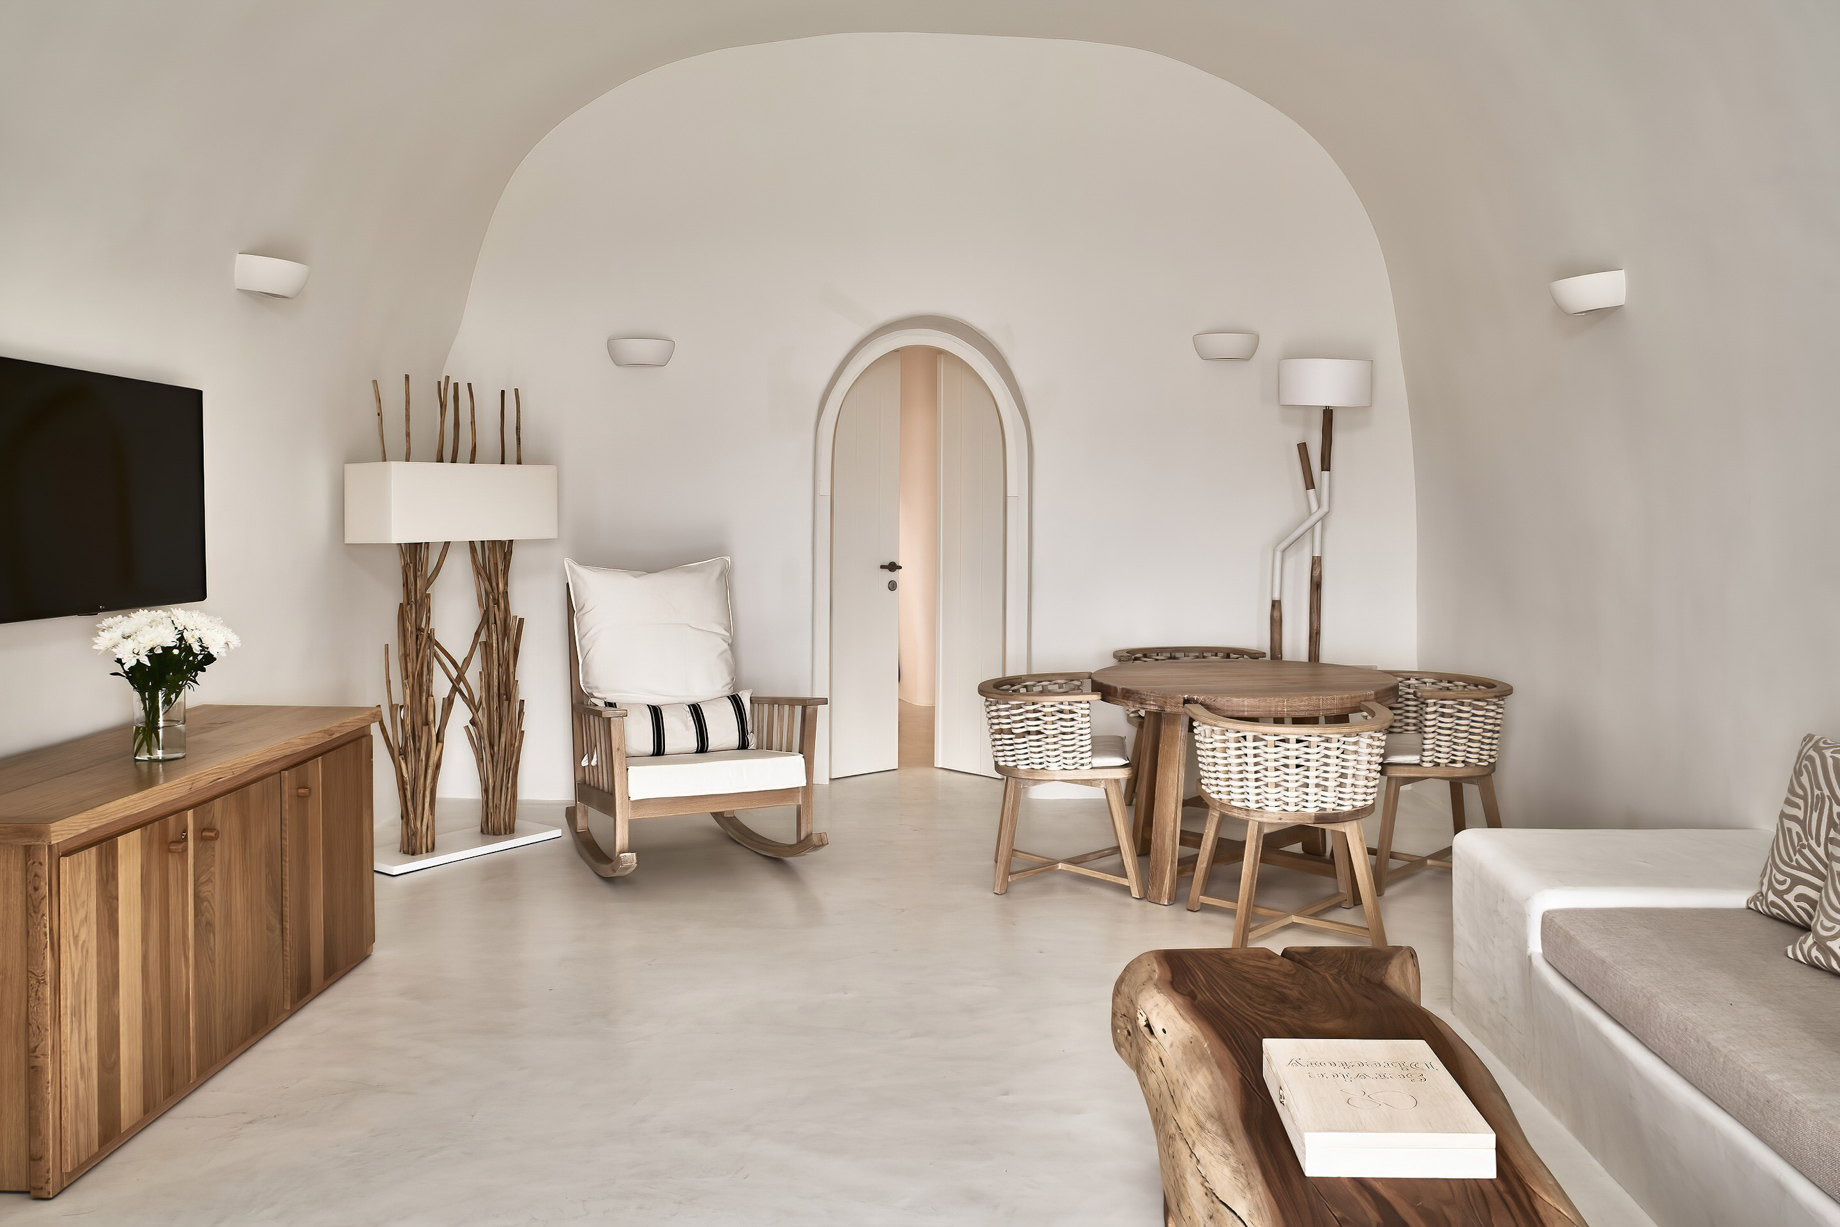 Mystique Hotel Santorini – Oia, Santorini Island, Greece – Holistic Villa Living Room